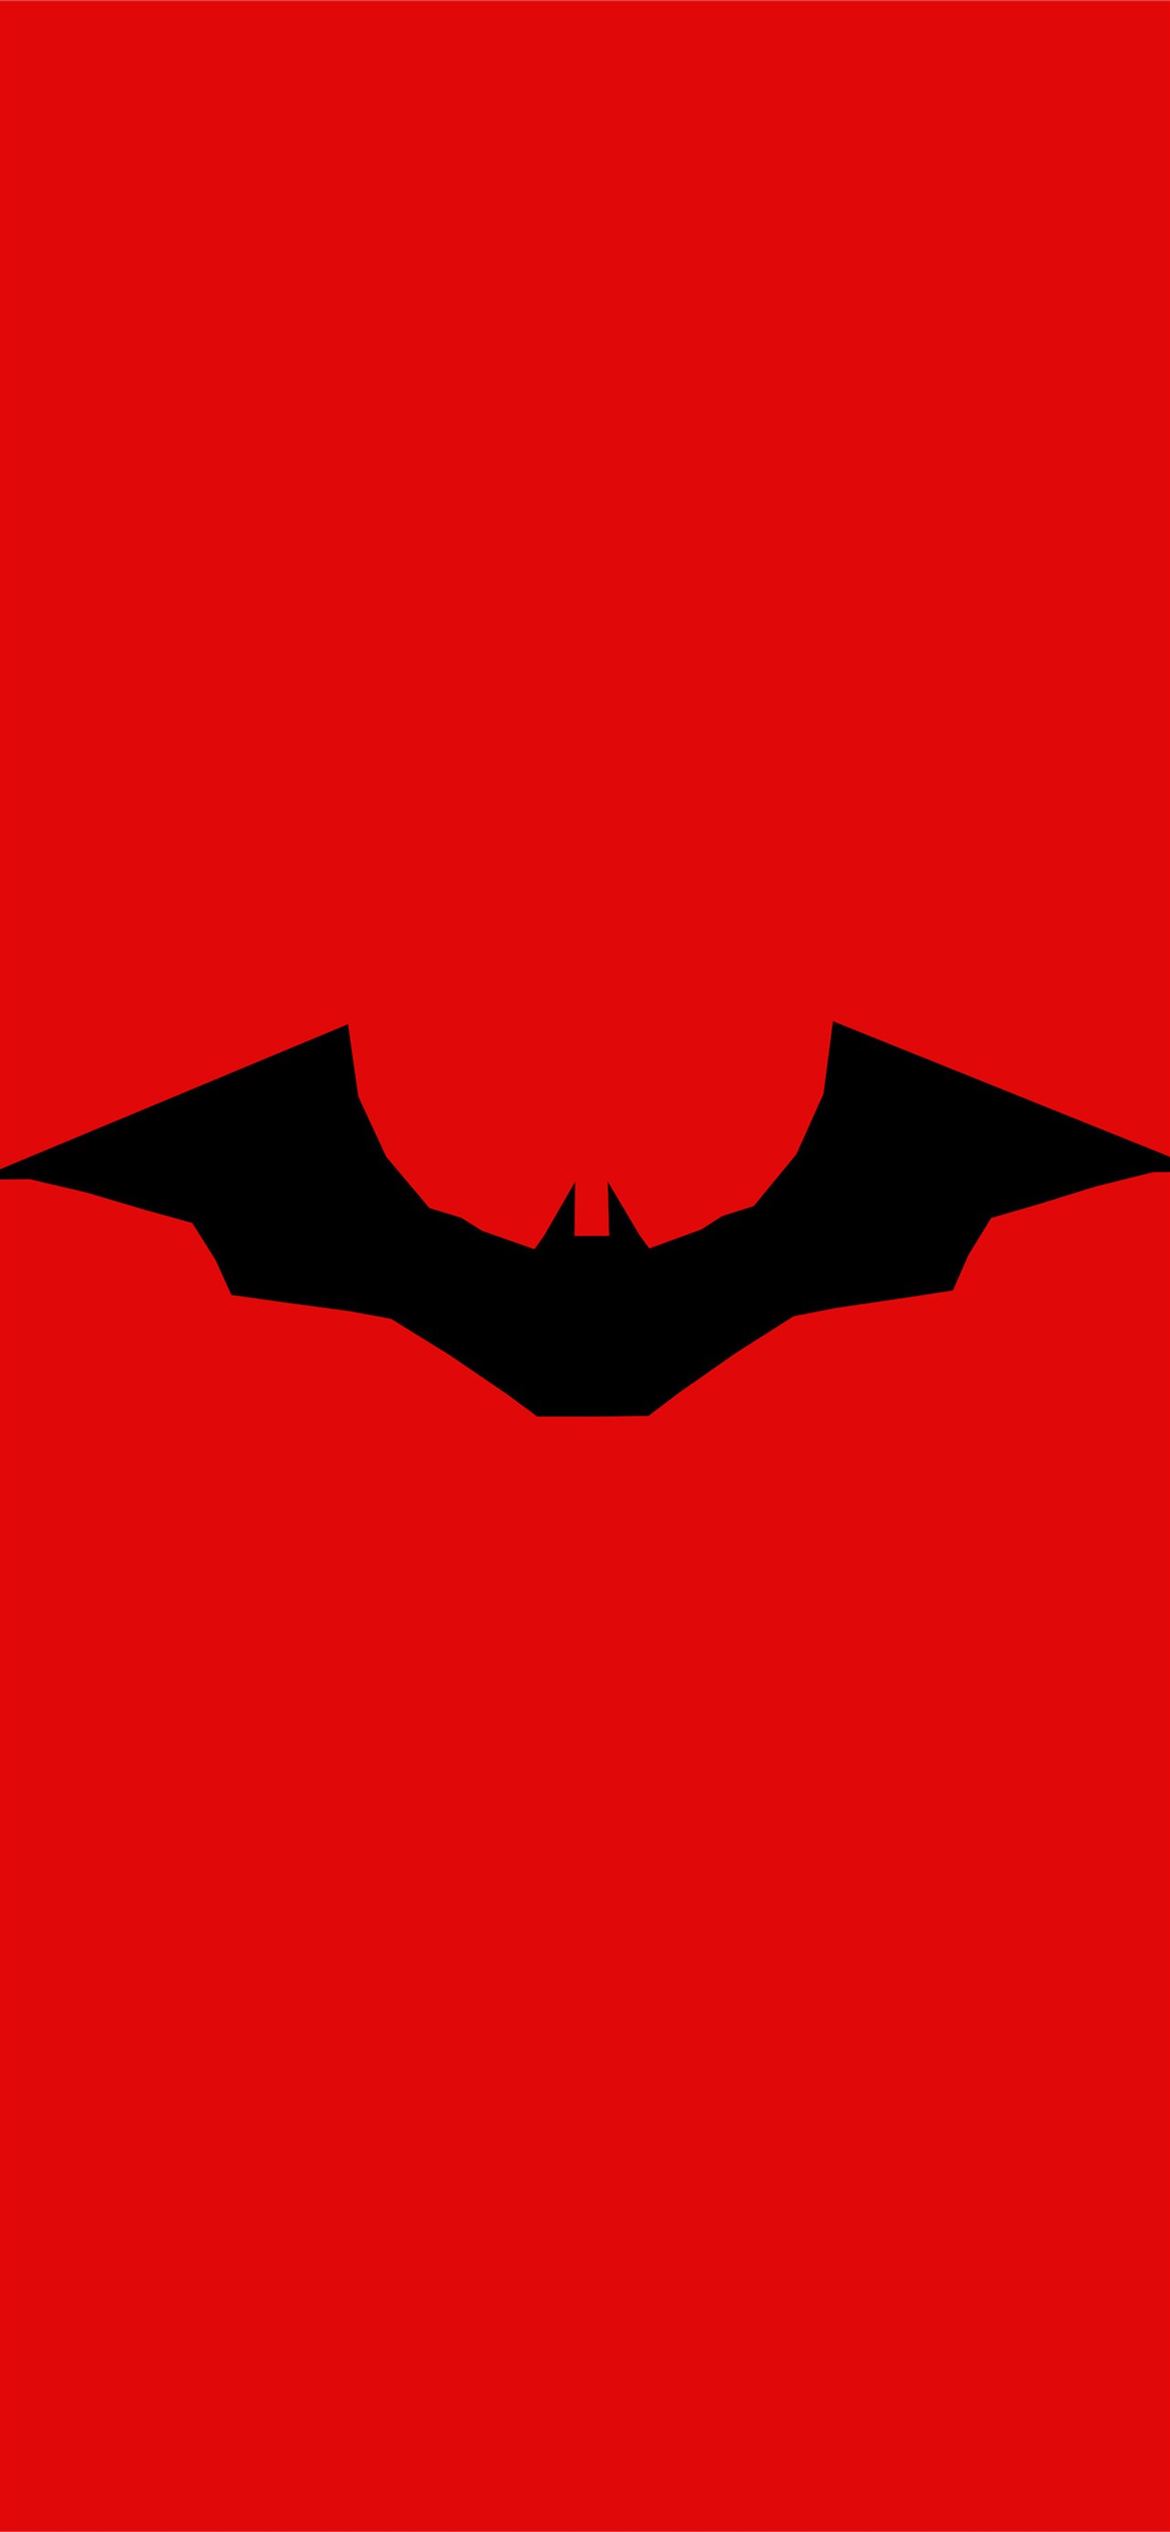 The Batman Logo 4k iPhone Wallpaper